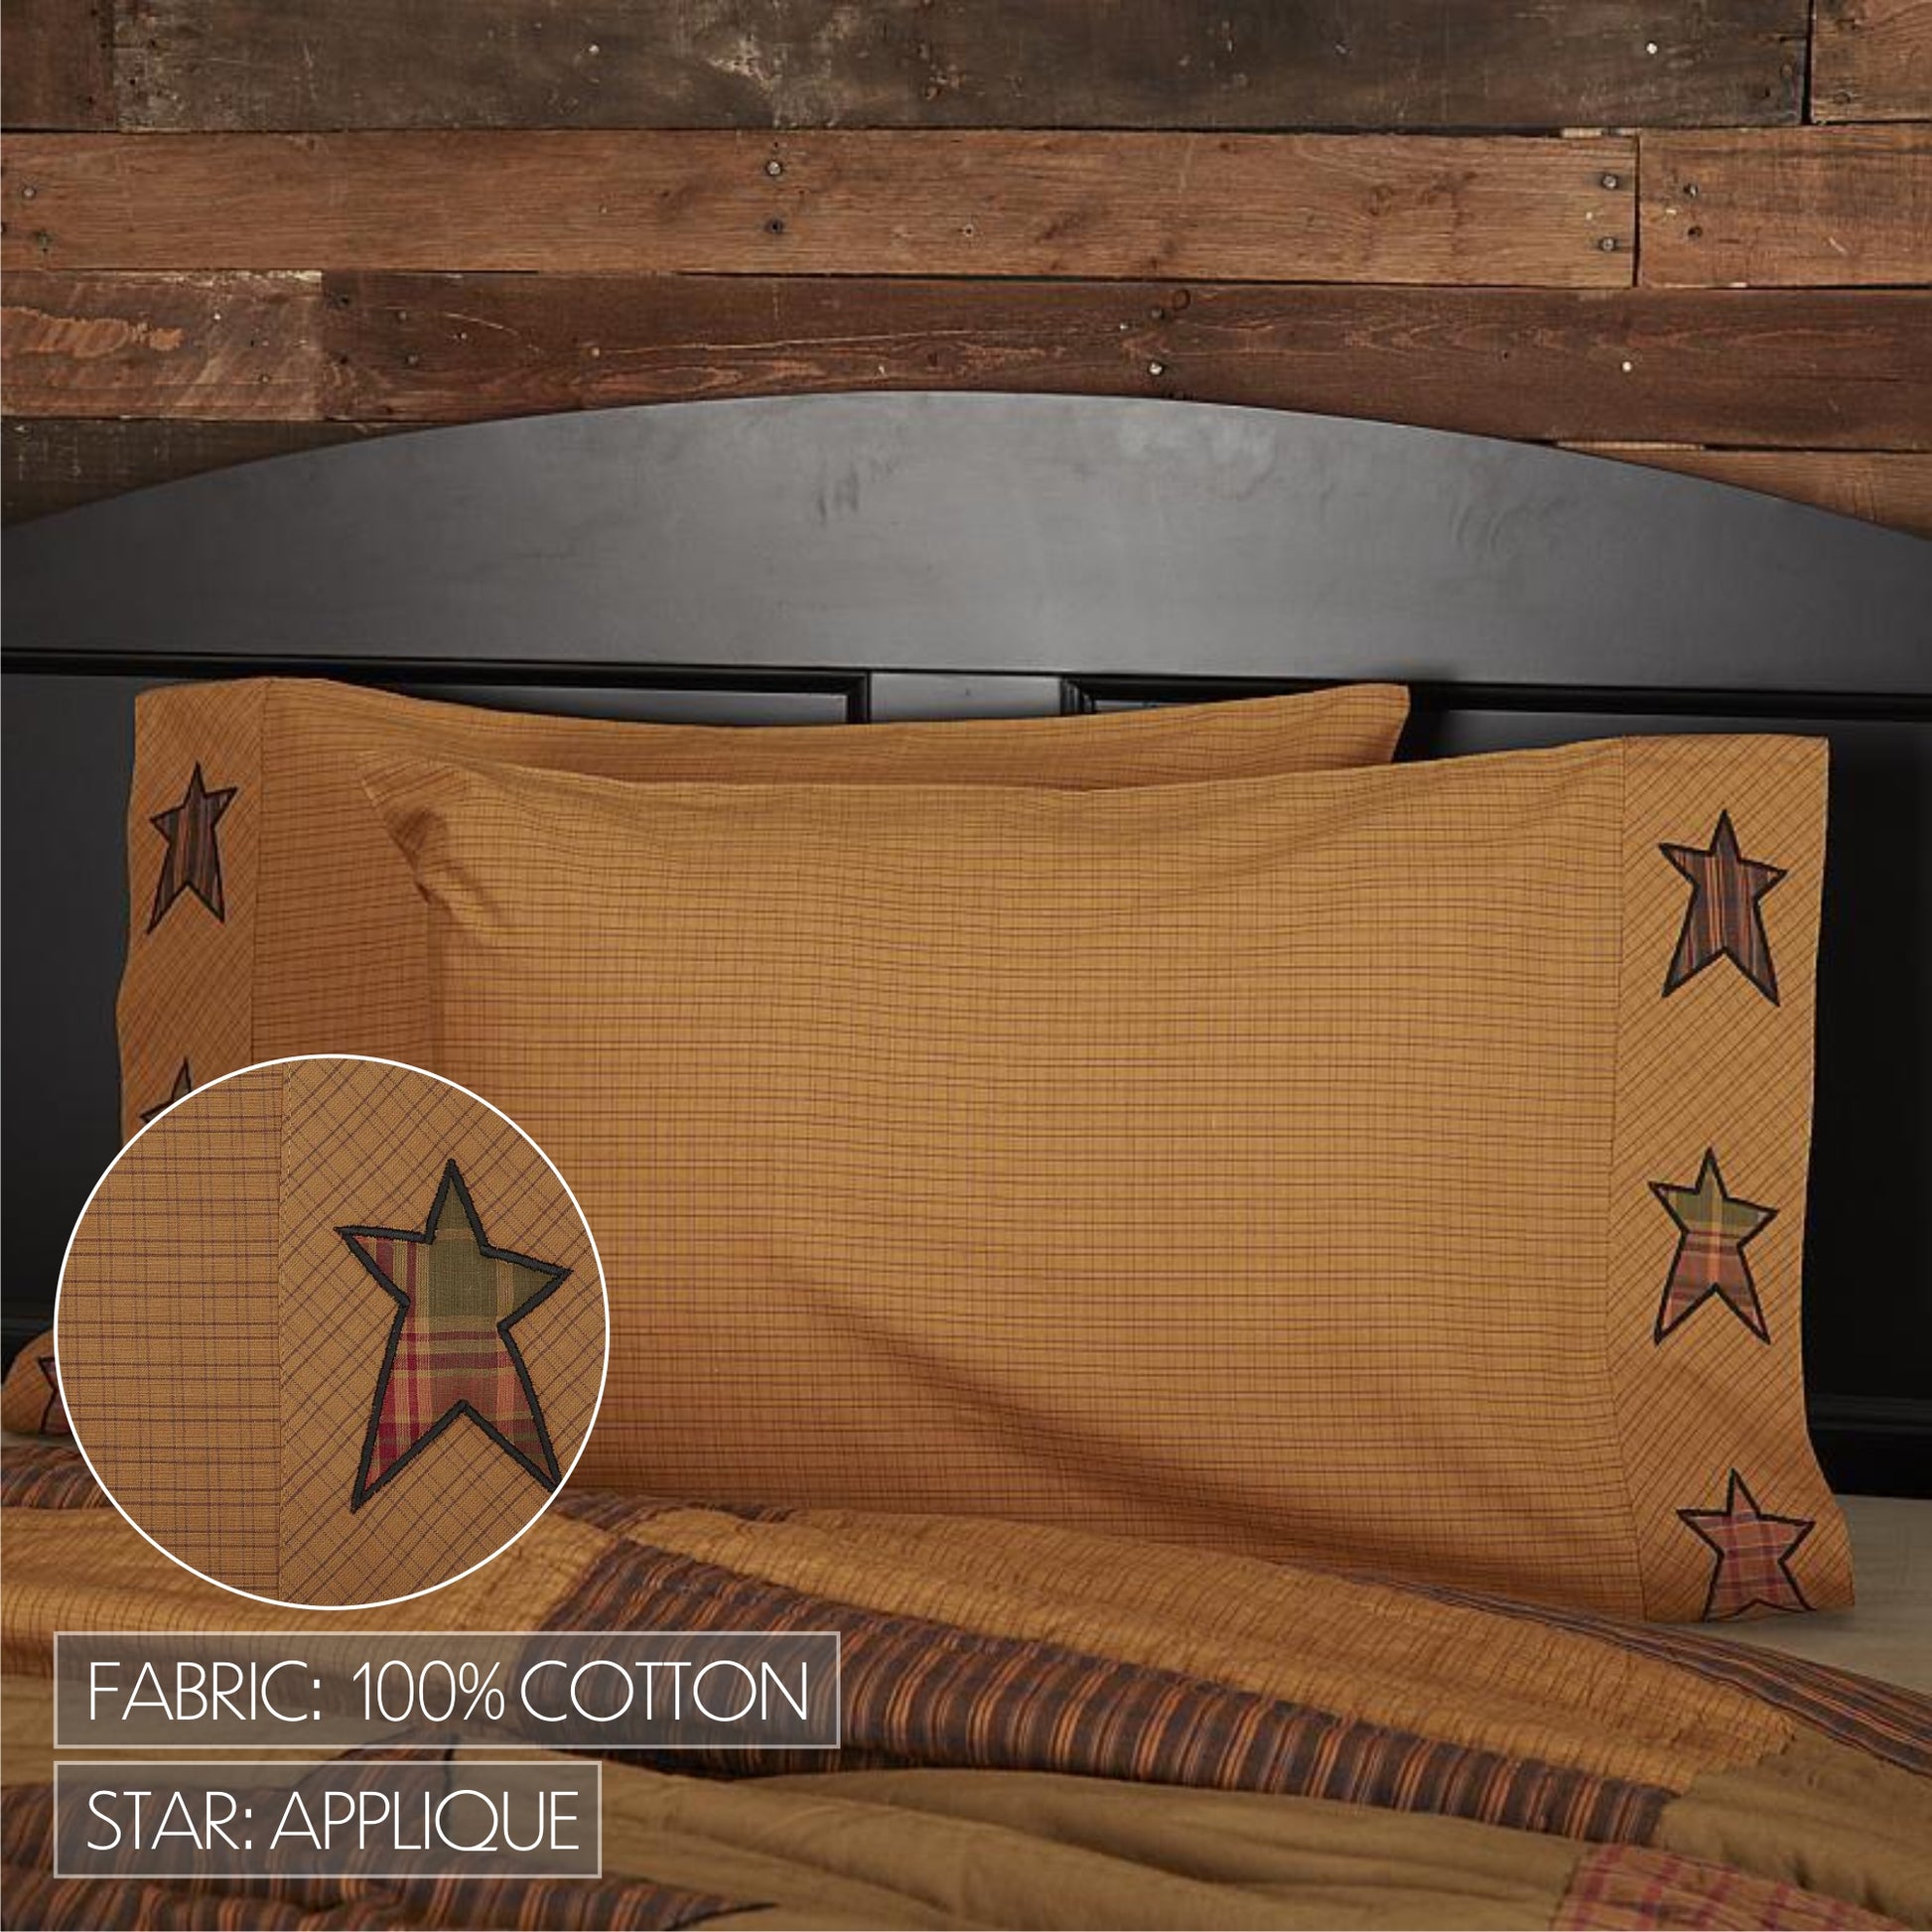 56783-Stratton-Standard-Pillow-Case-w-Applique-Star-Set-of-2-21x30-image-1